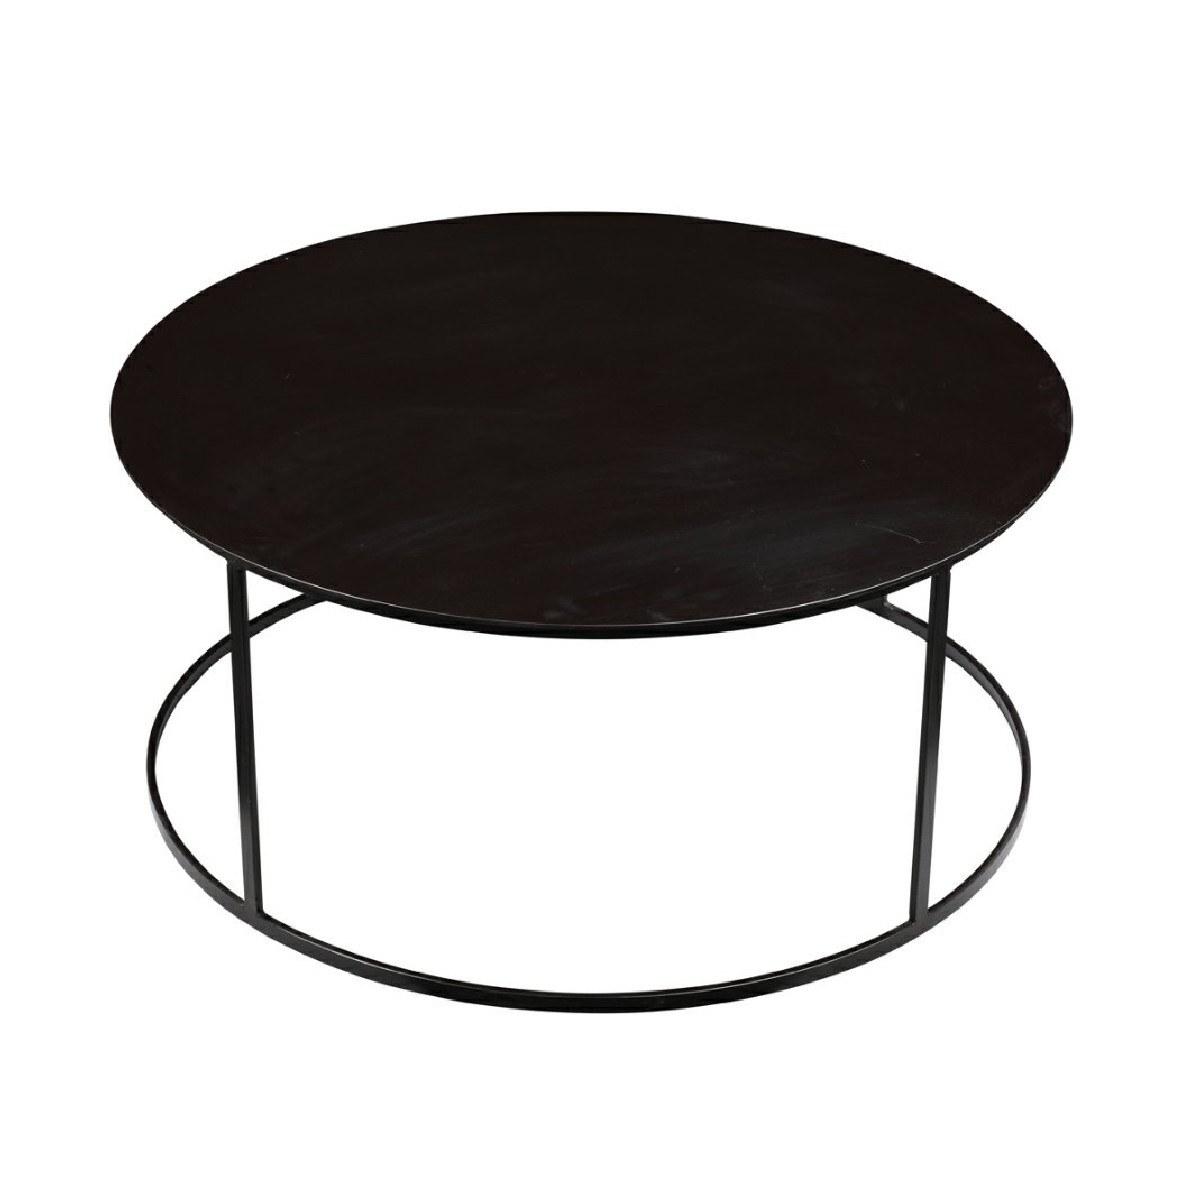 Round Metal Frame Side Table With Tubular Legs, Dark Brown- Saltoro Sherpi